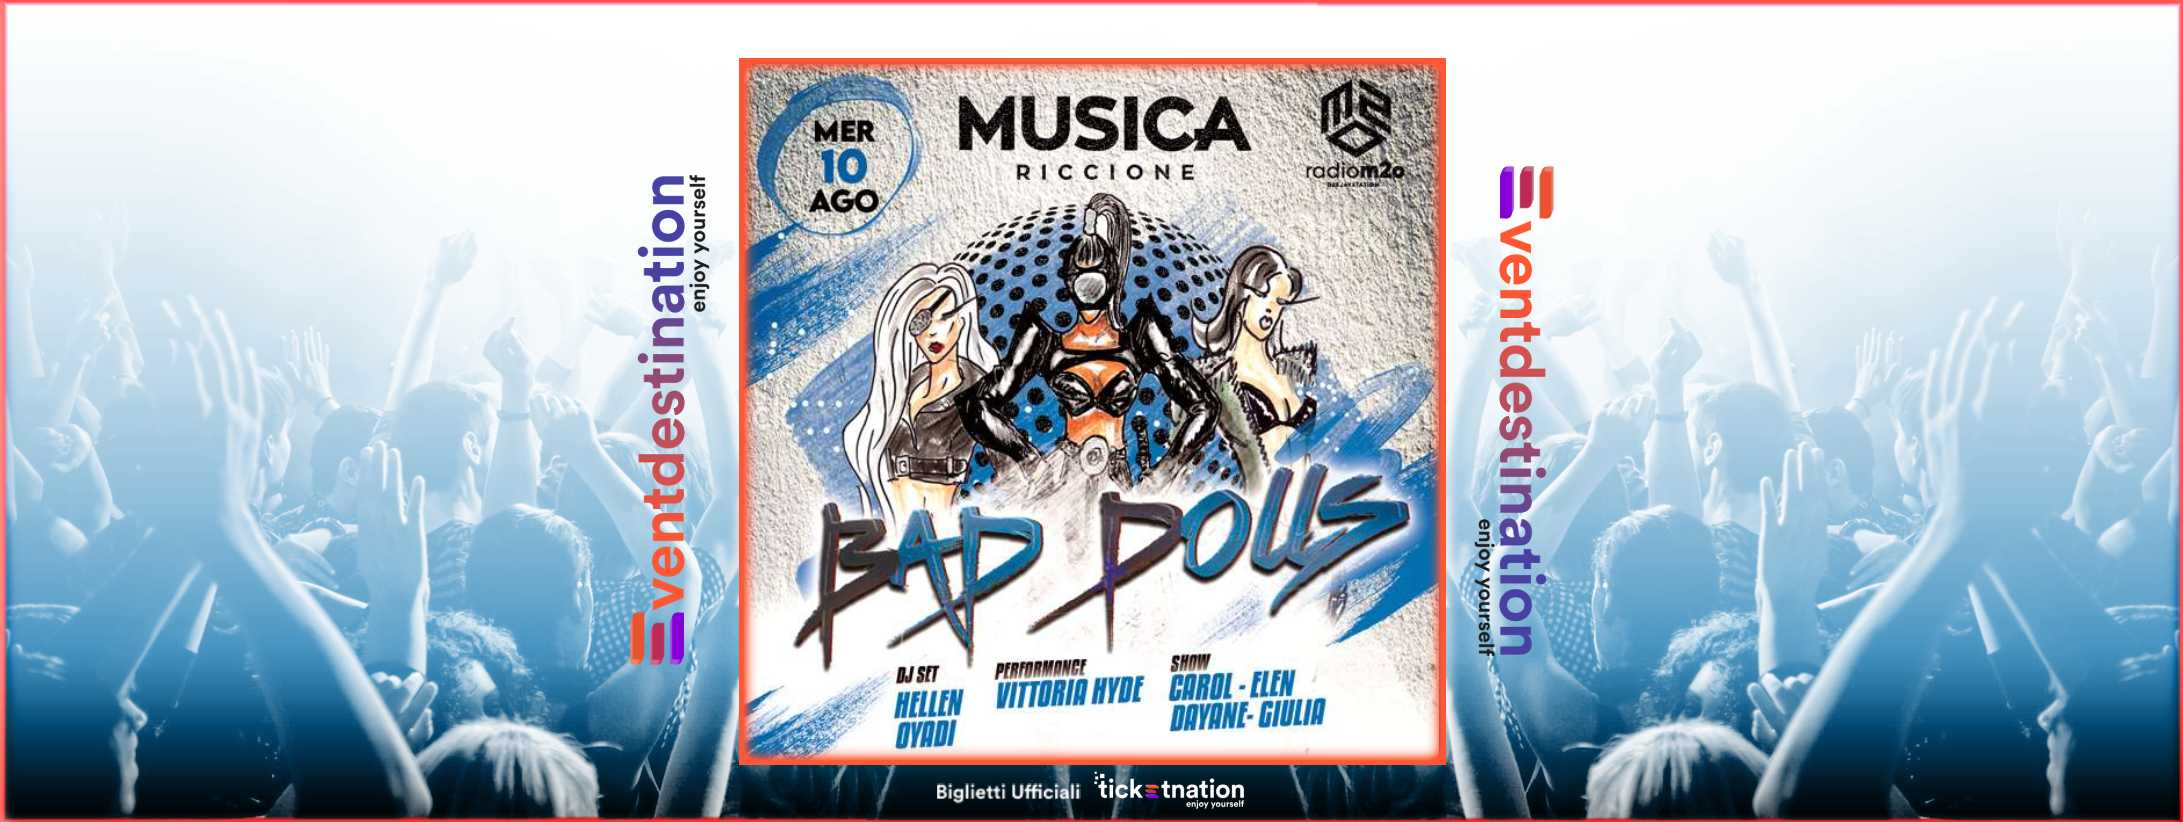 Bad Dolls @ Musica 10 ago 2022